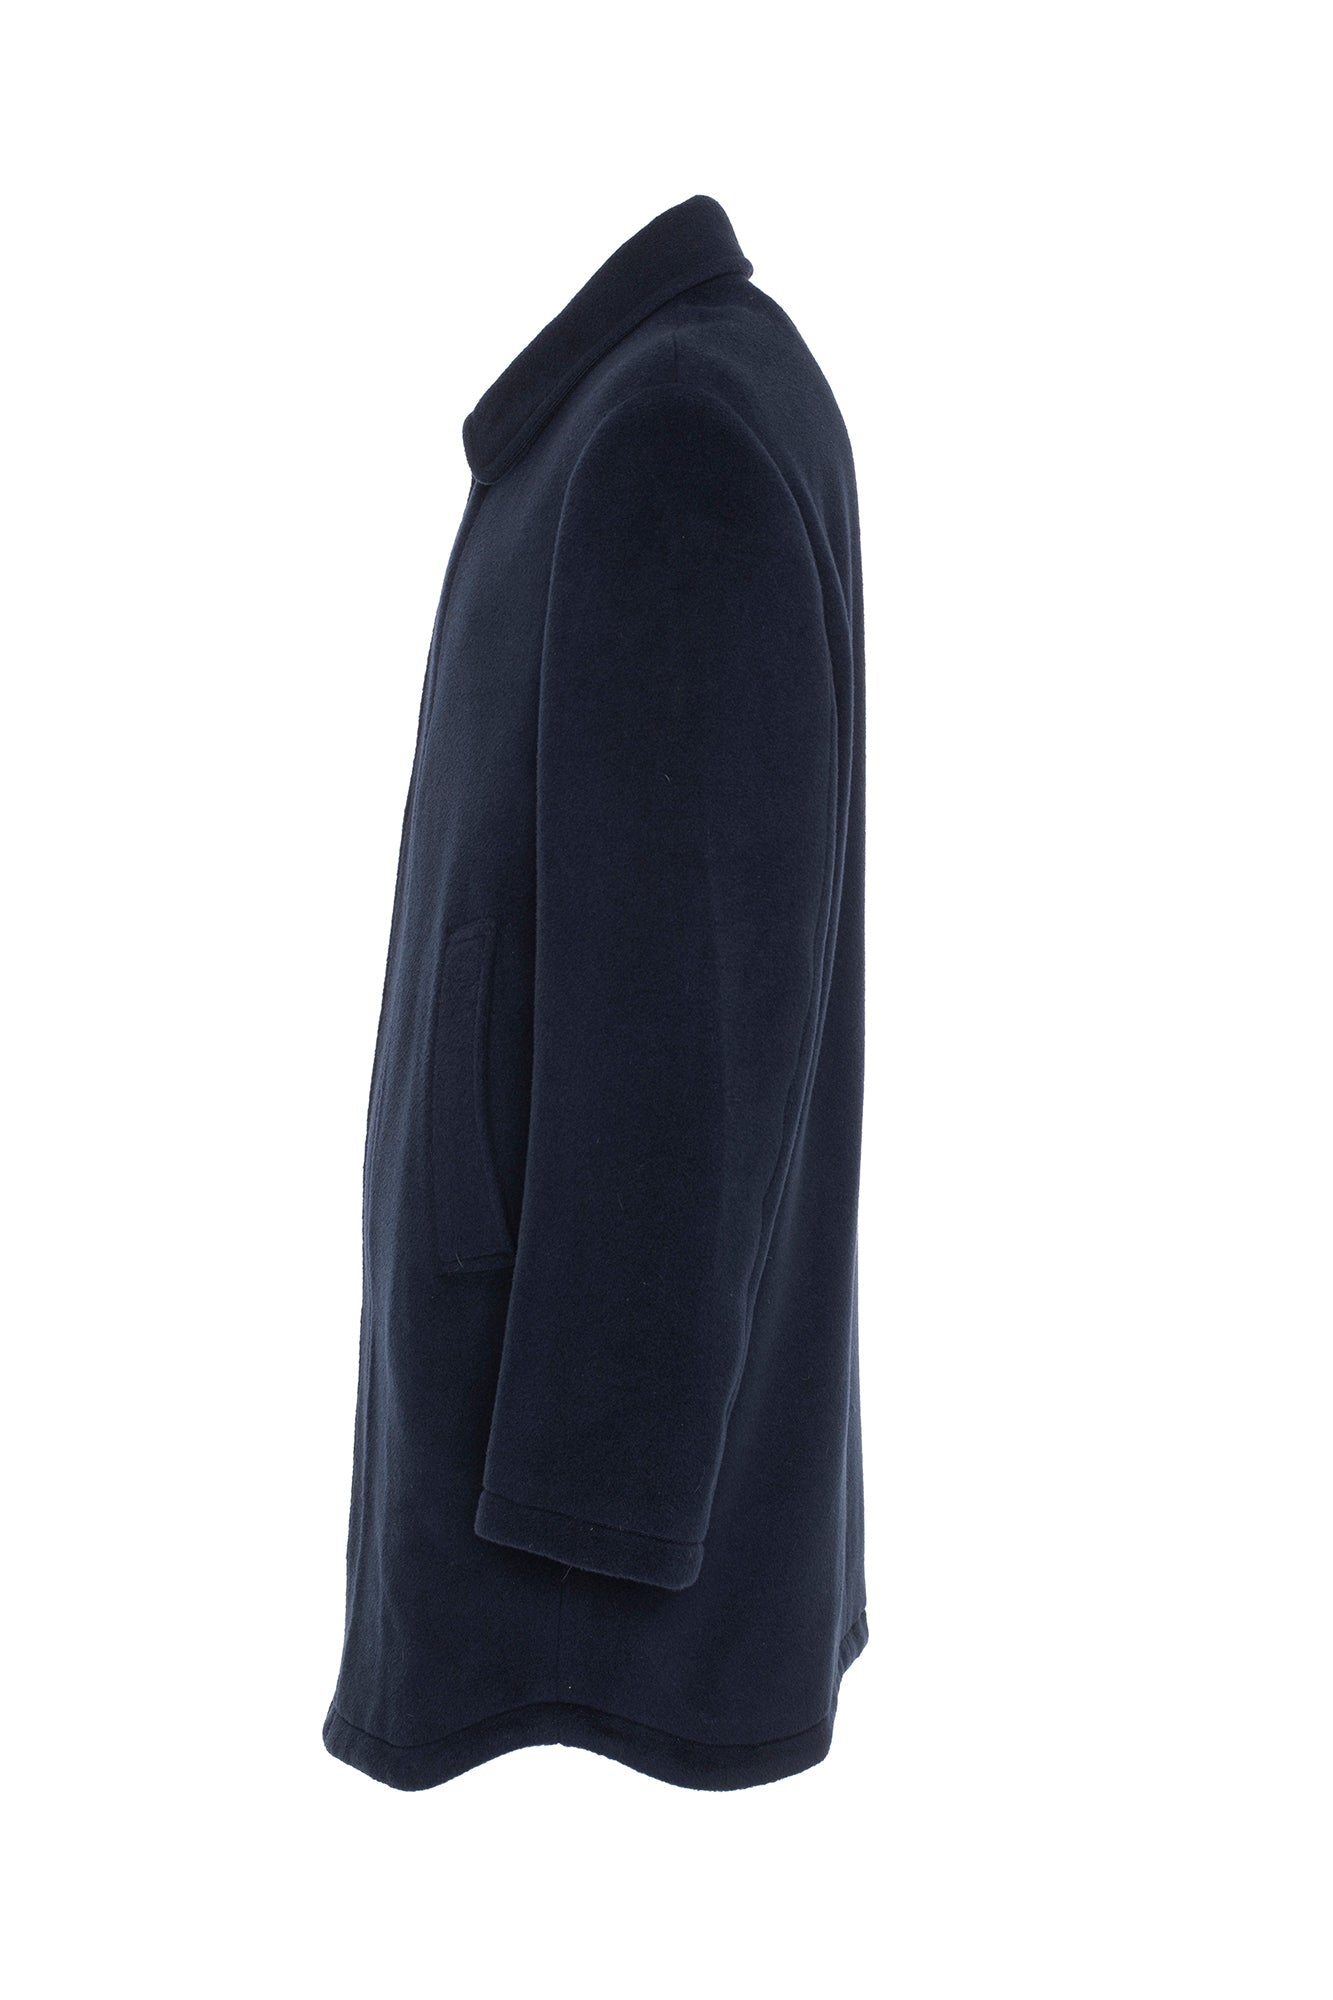 SODA NAVY WOOL TOPCOAT - MENS - Cardinal of Canada-CA - Soda - navy wool topcoat 36 inch length